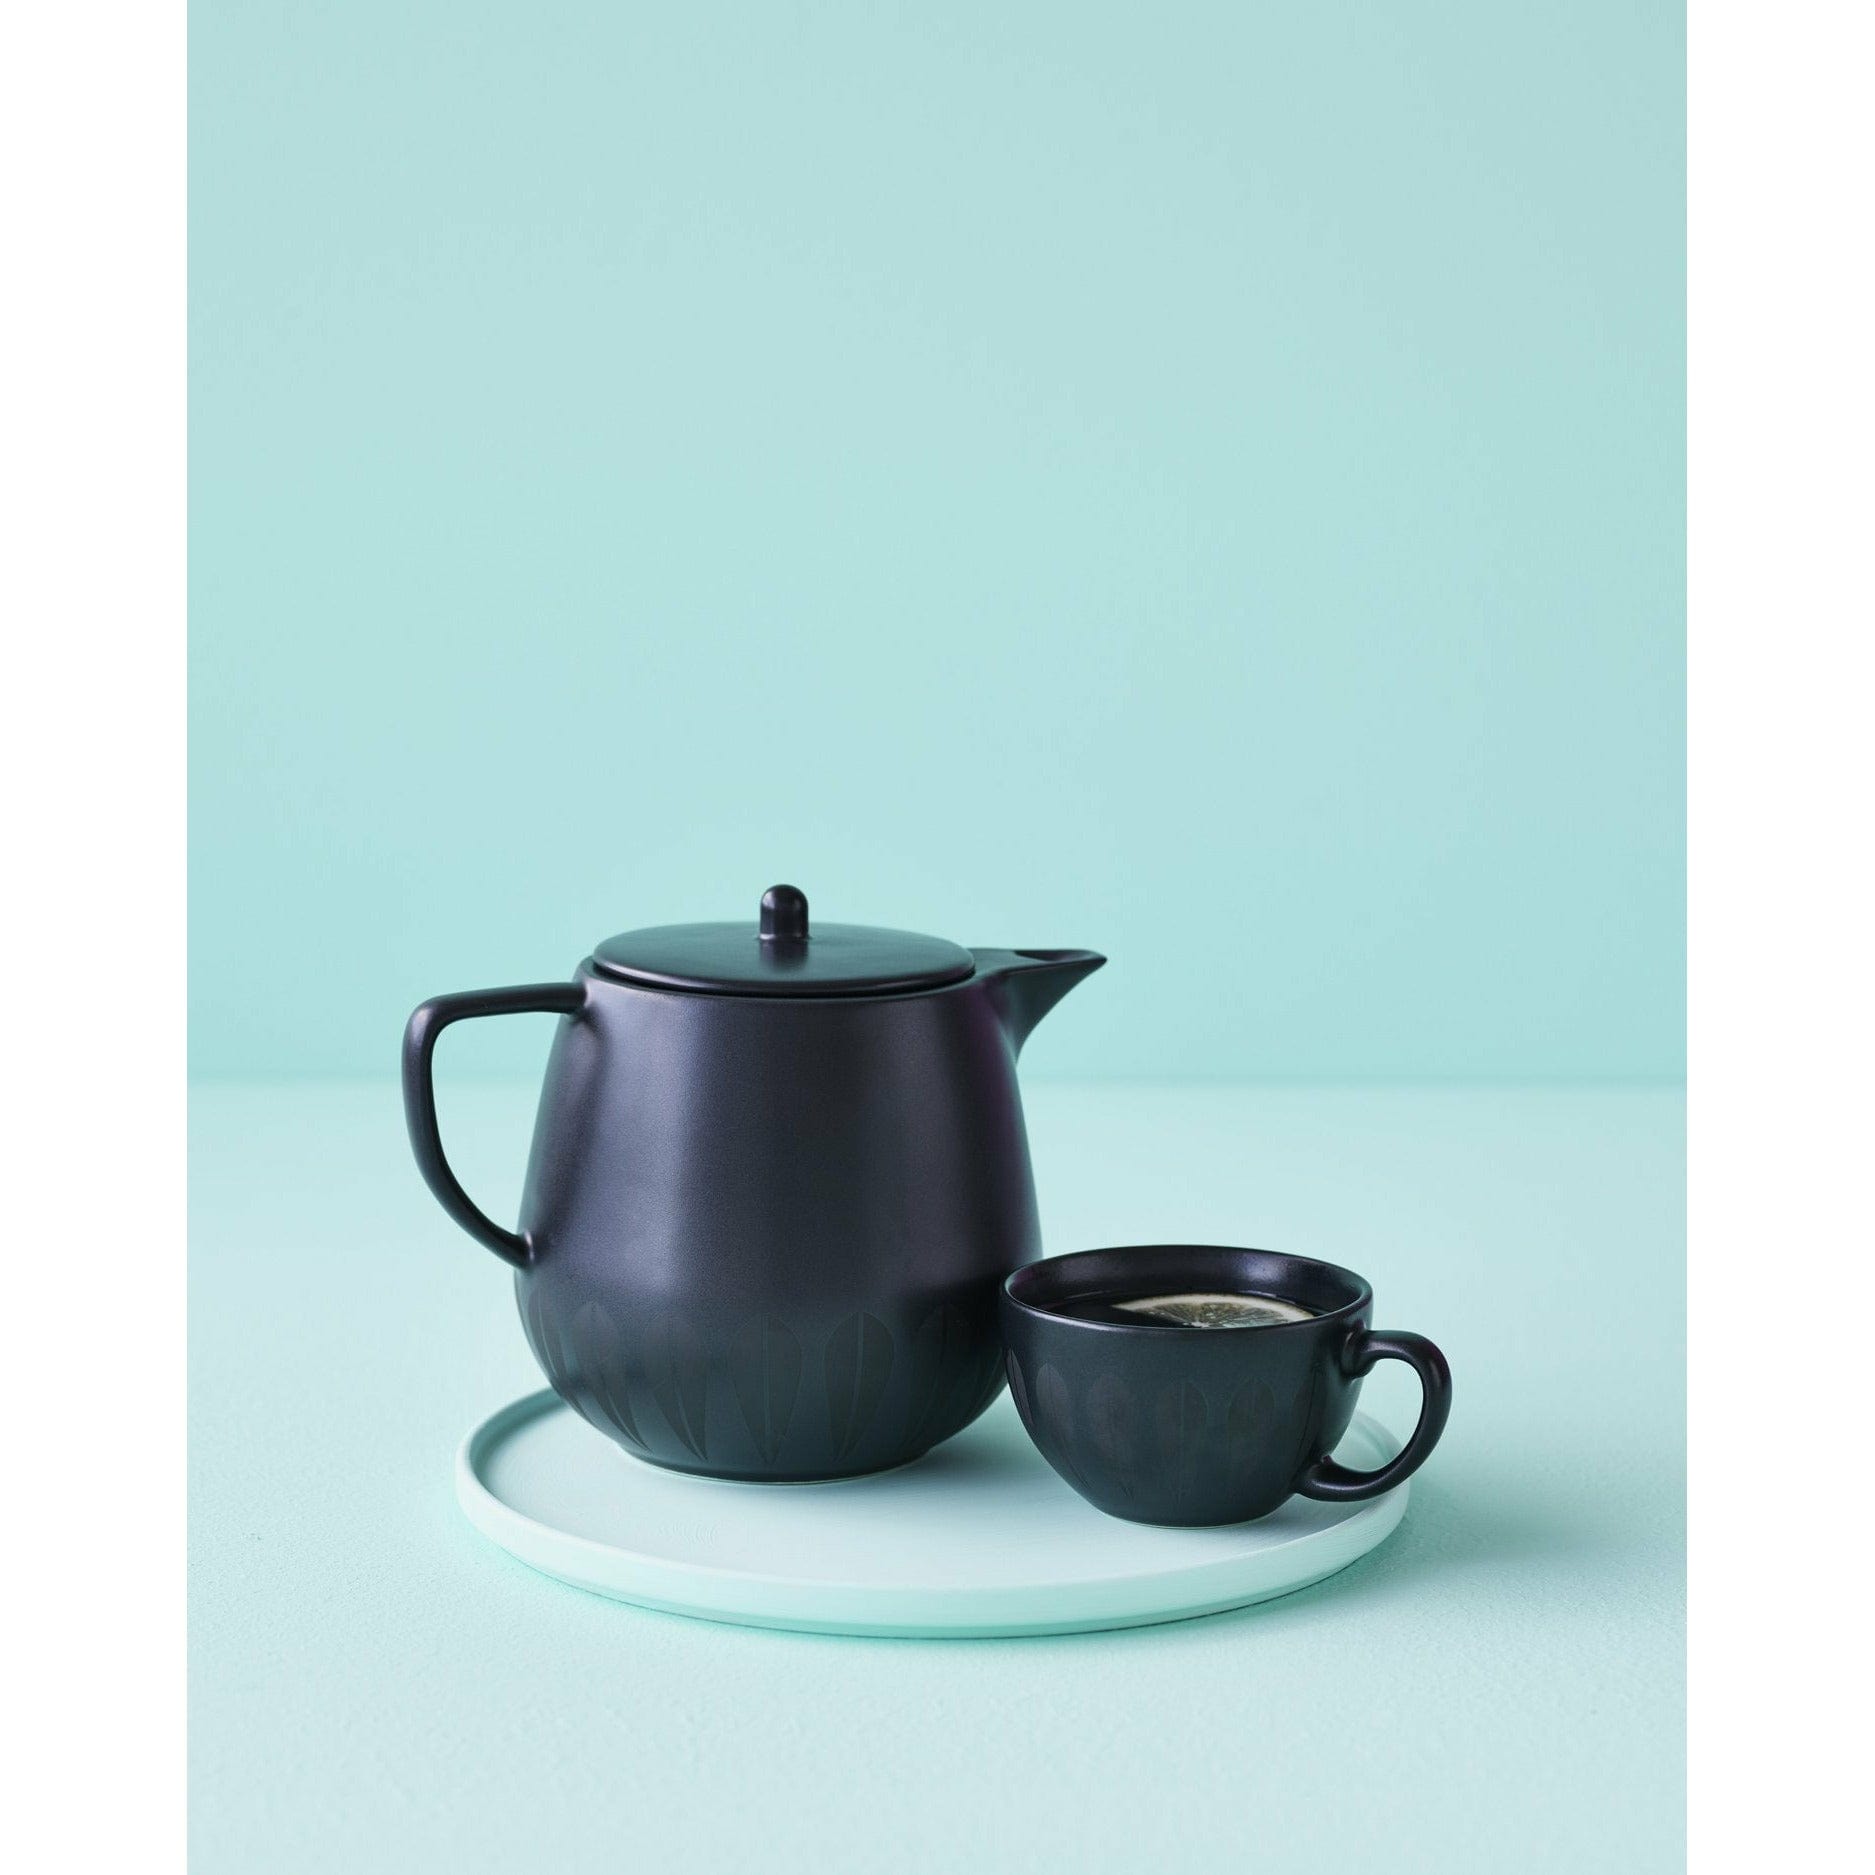 Lucie Kaas Arne Clausen Lotus Teapot, černá